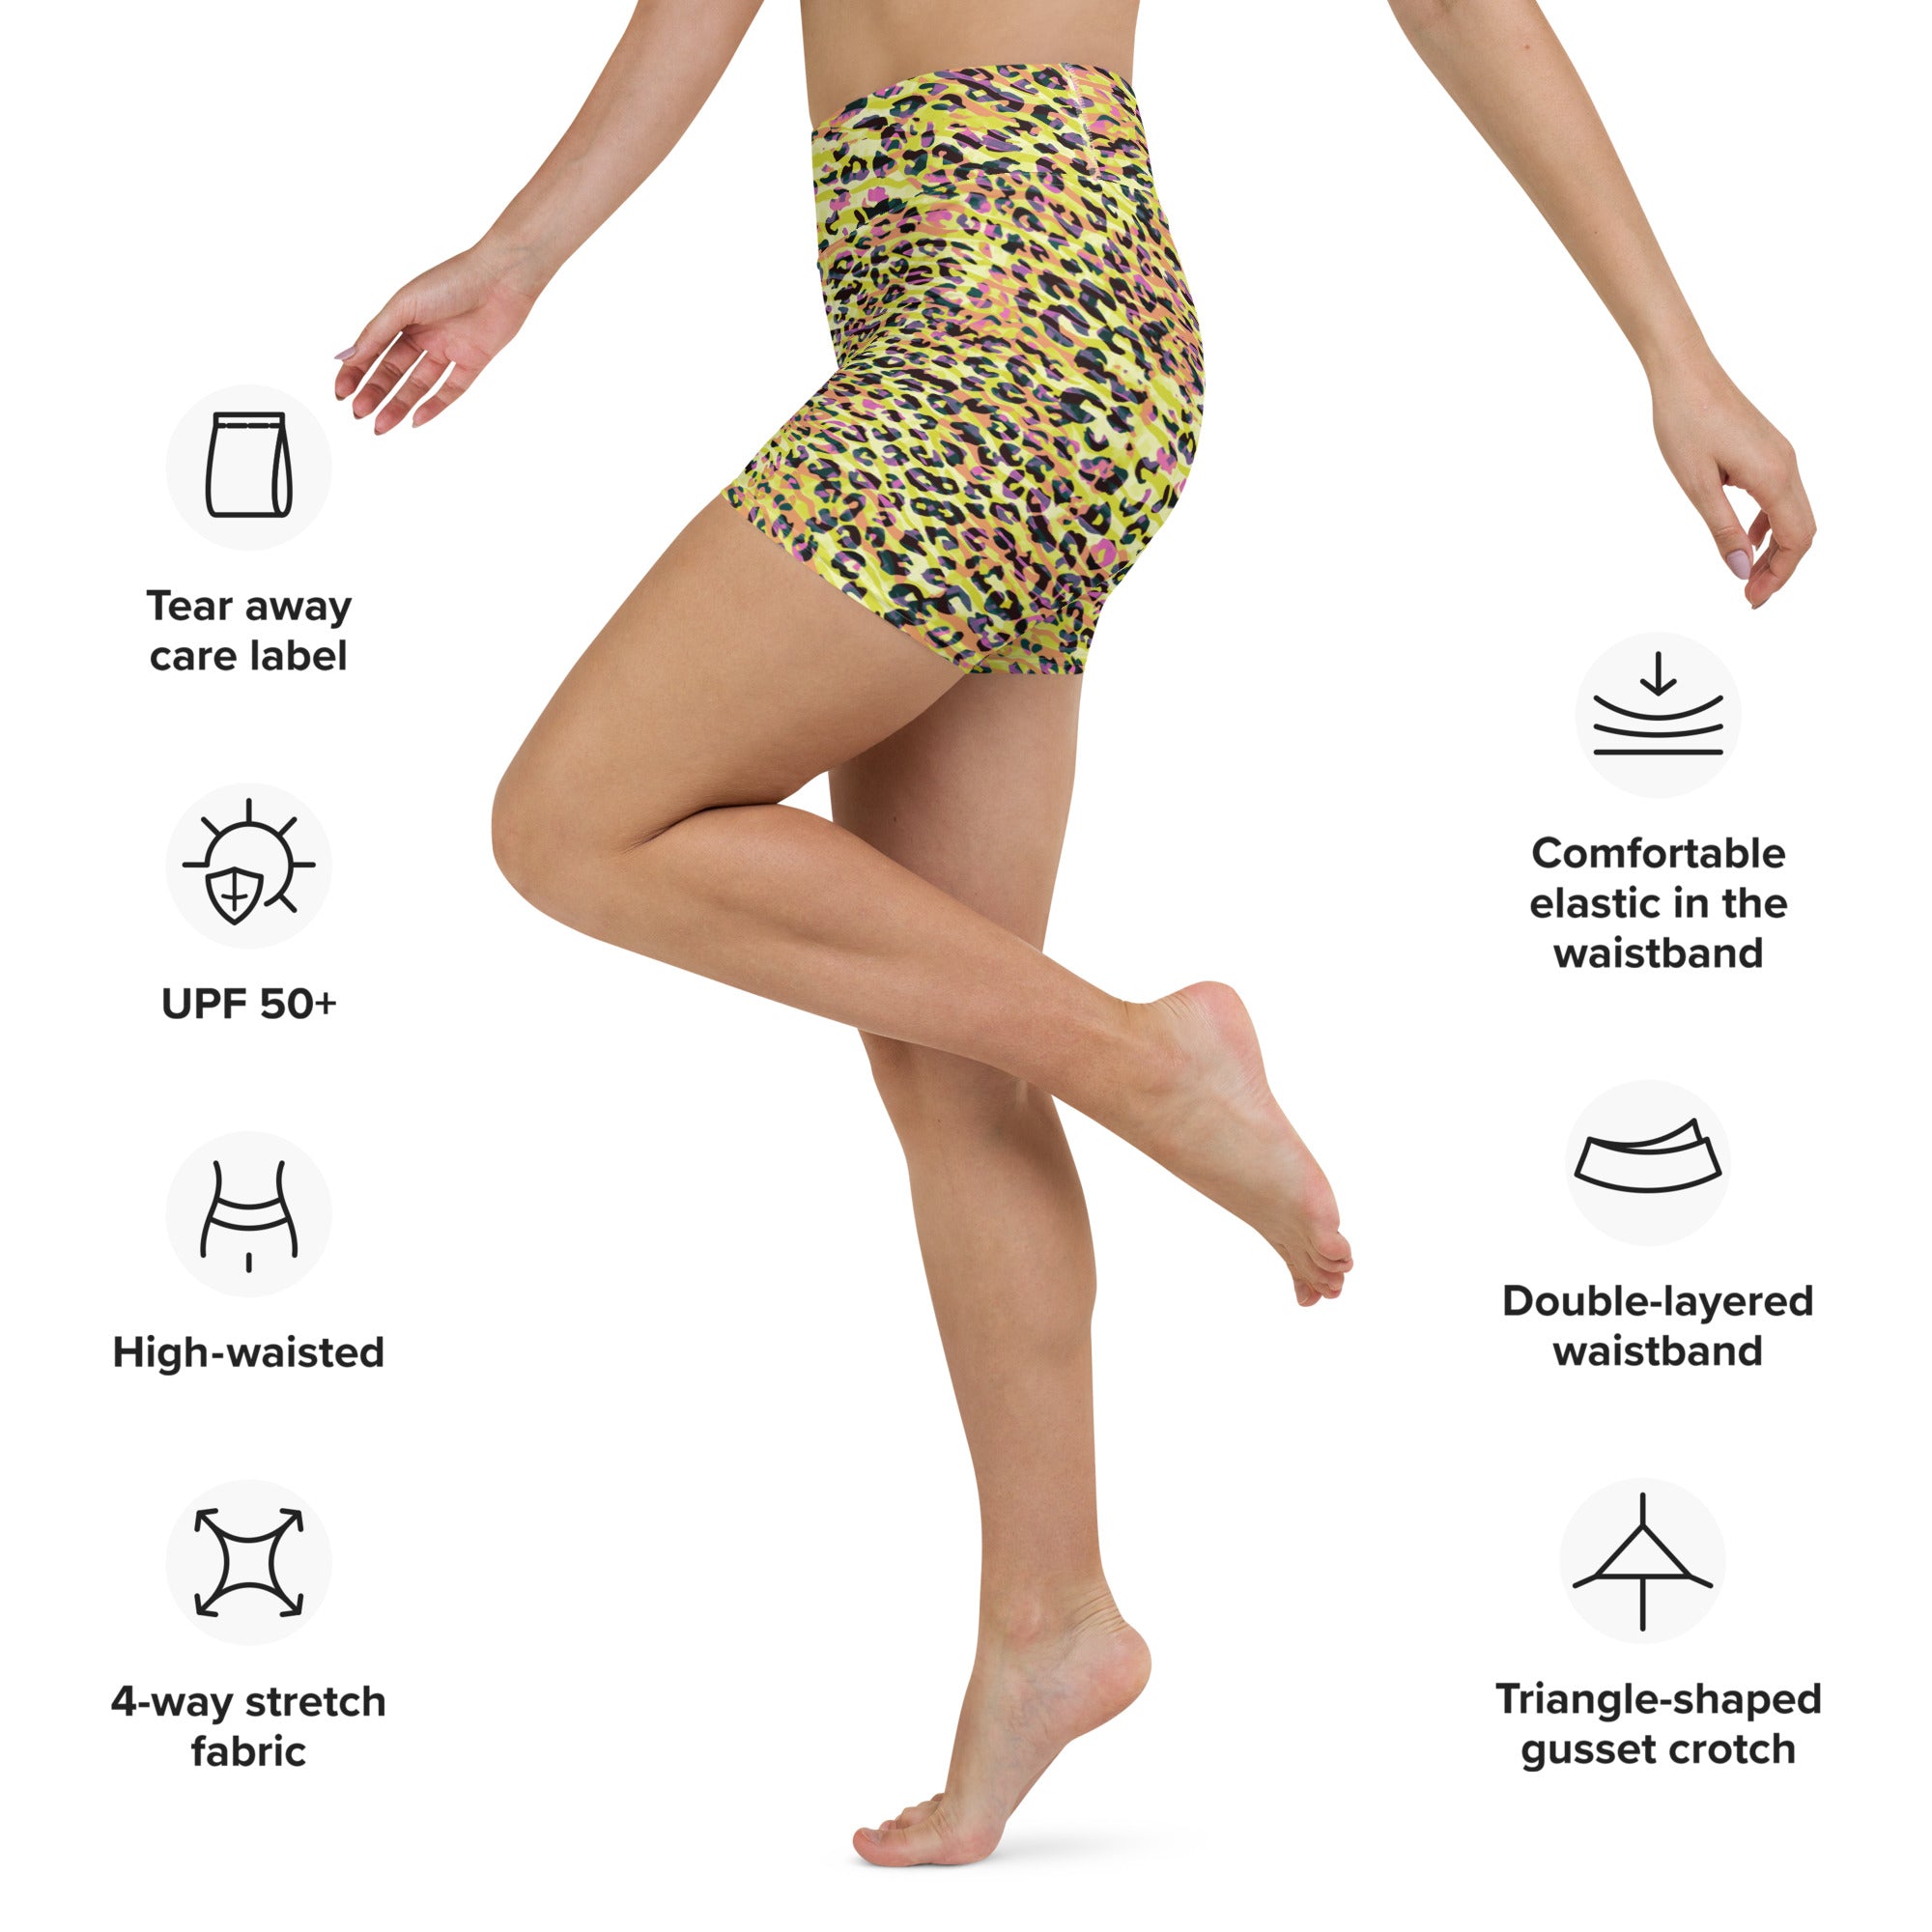 Yoga Shorts- ZEBRA AND LEOPARD PRINT YELLOW WITH ORANGE